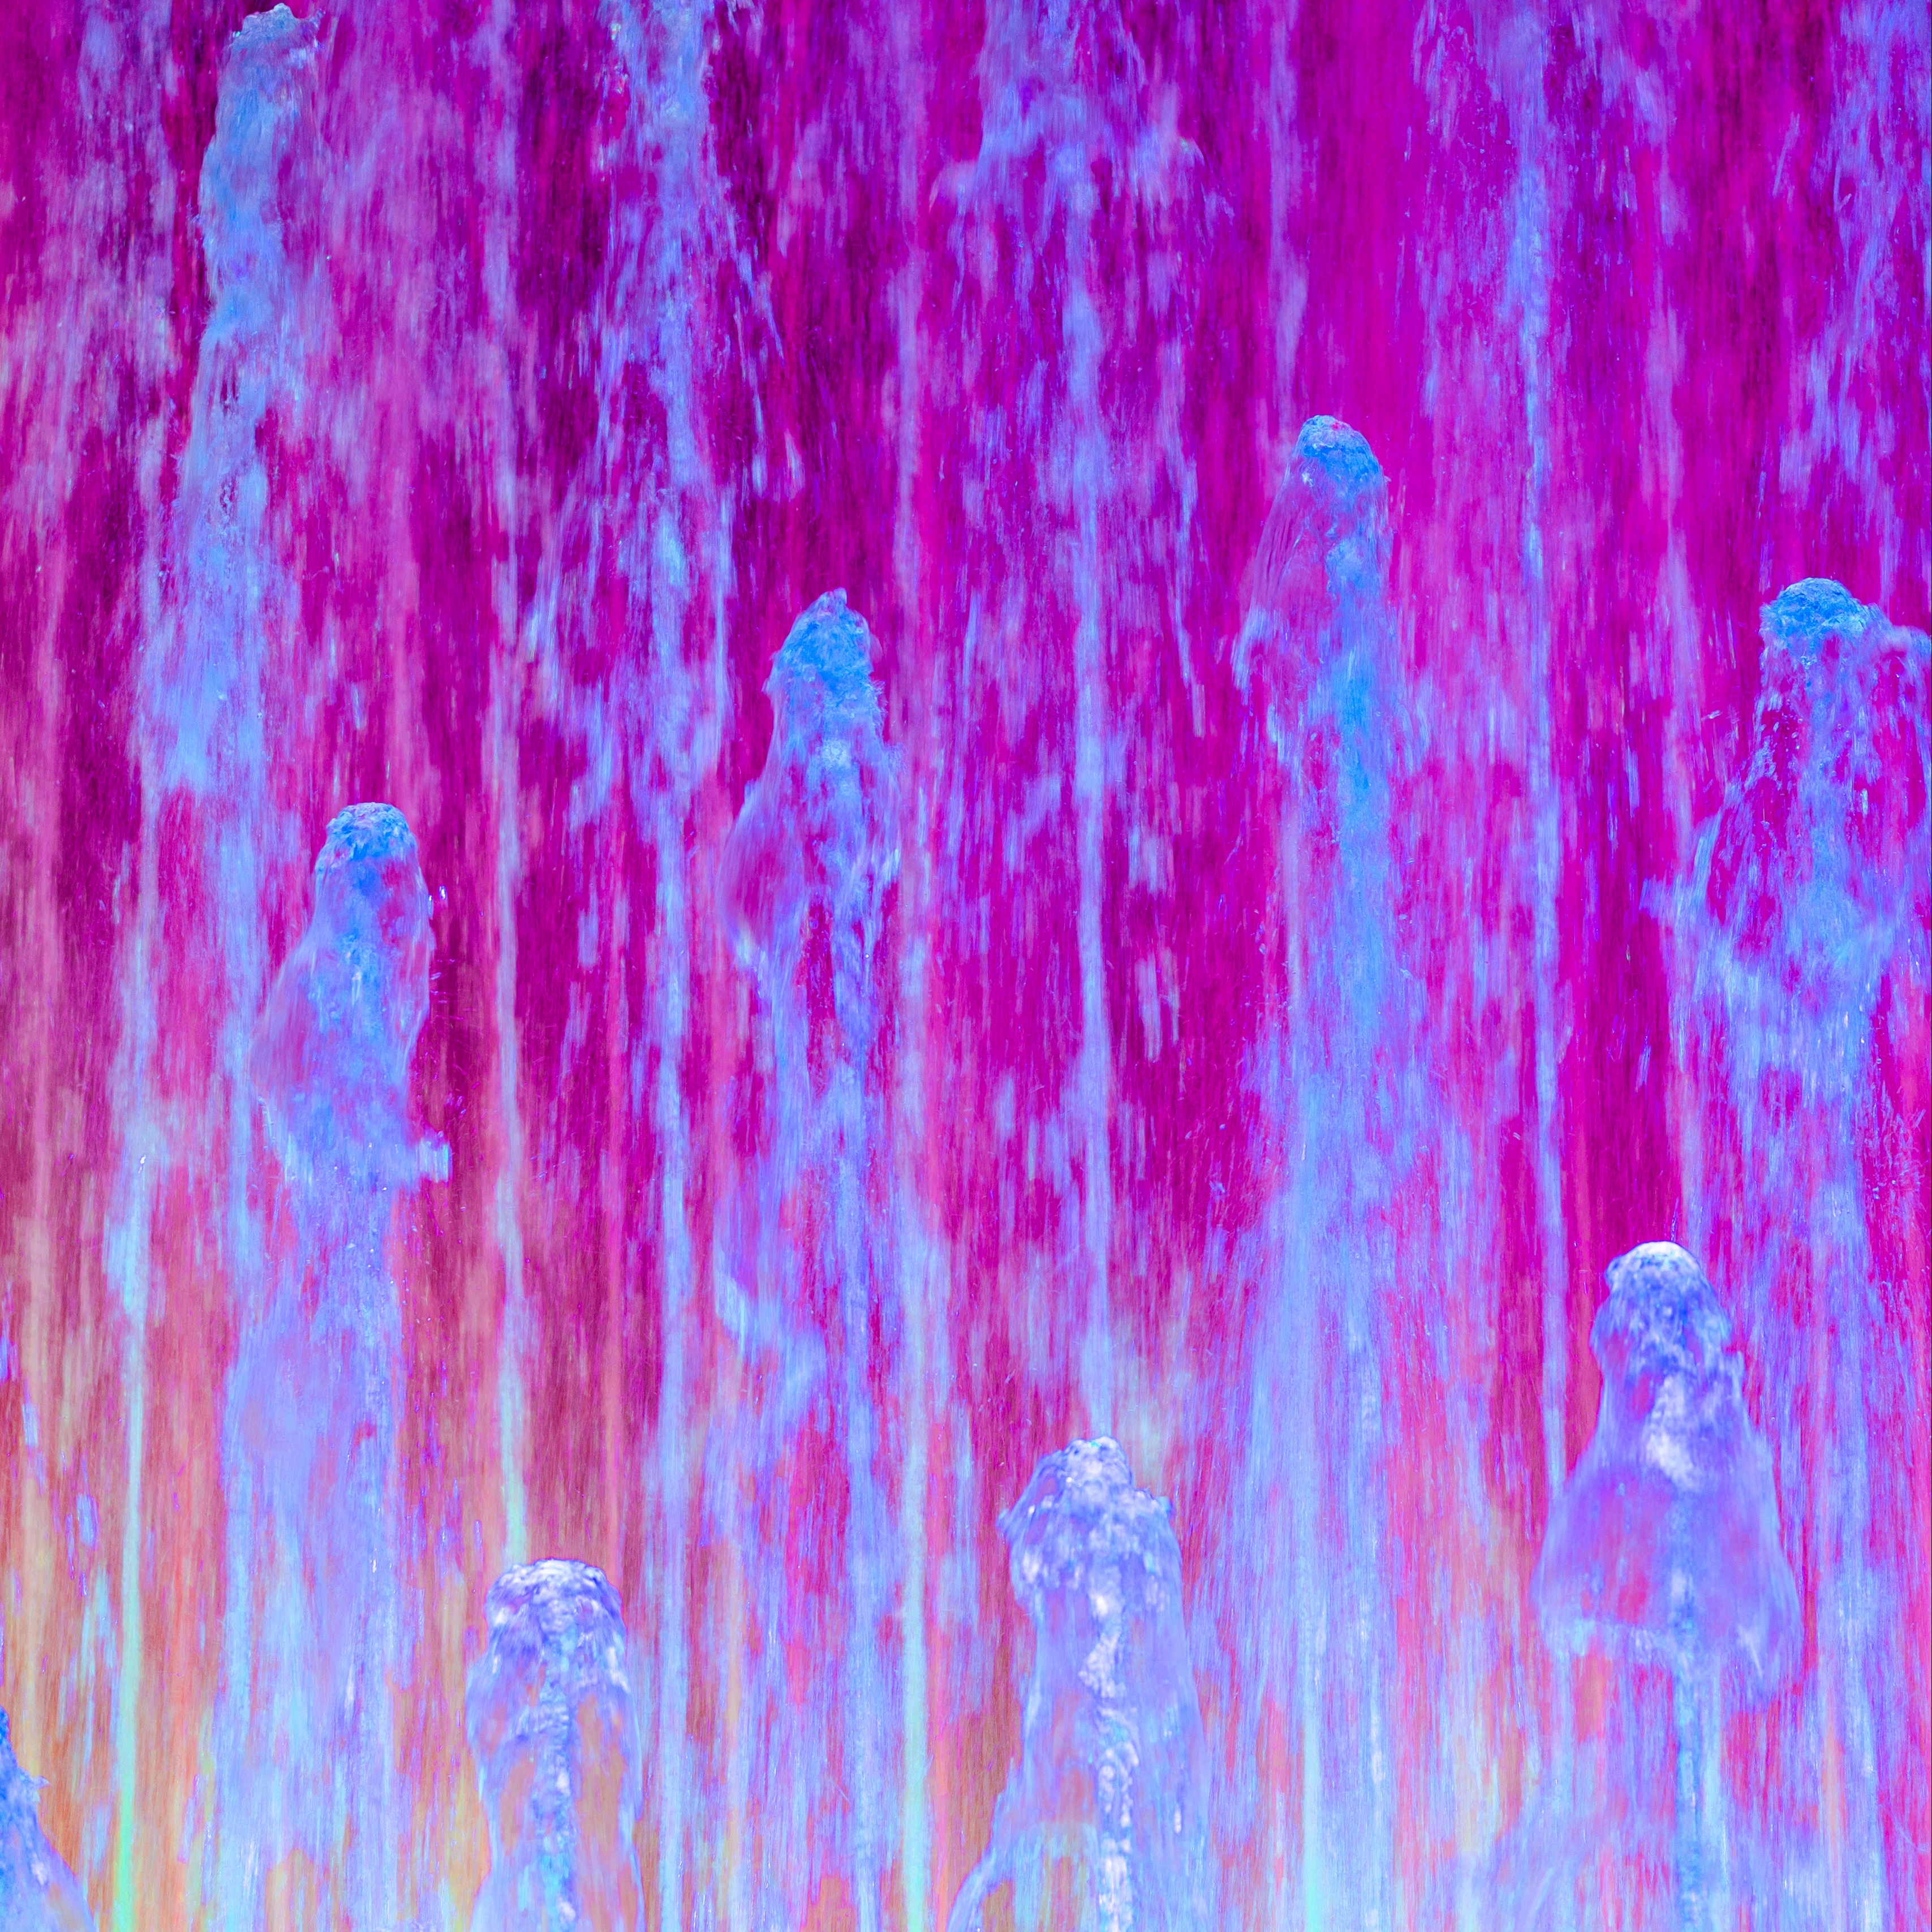 Wallpaper Fountain, Jets, Water, Lights, Pink - 1080p Pink Water - HD Wallpaper 